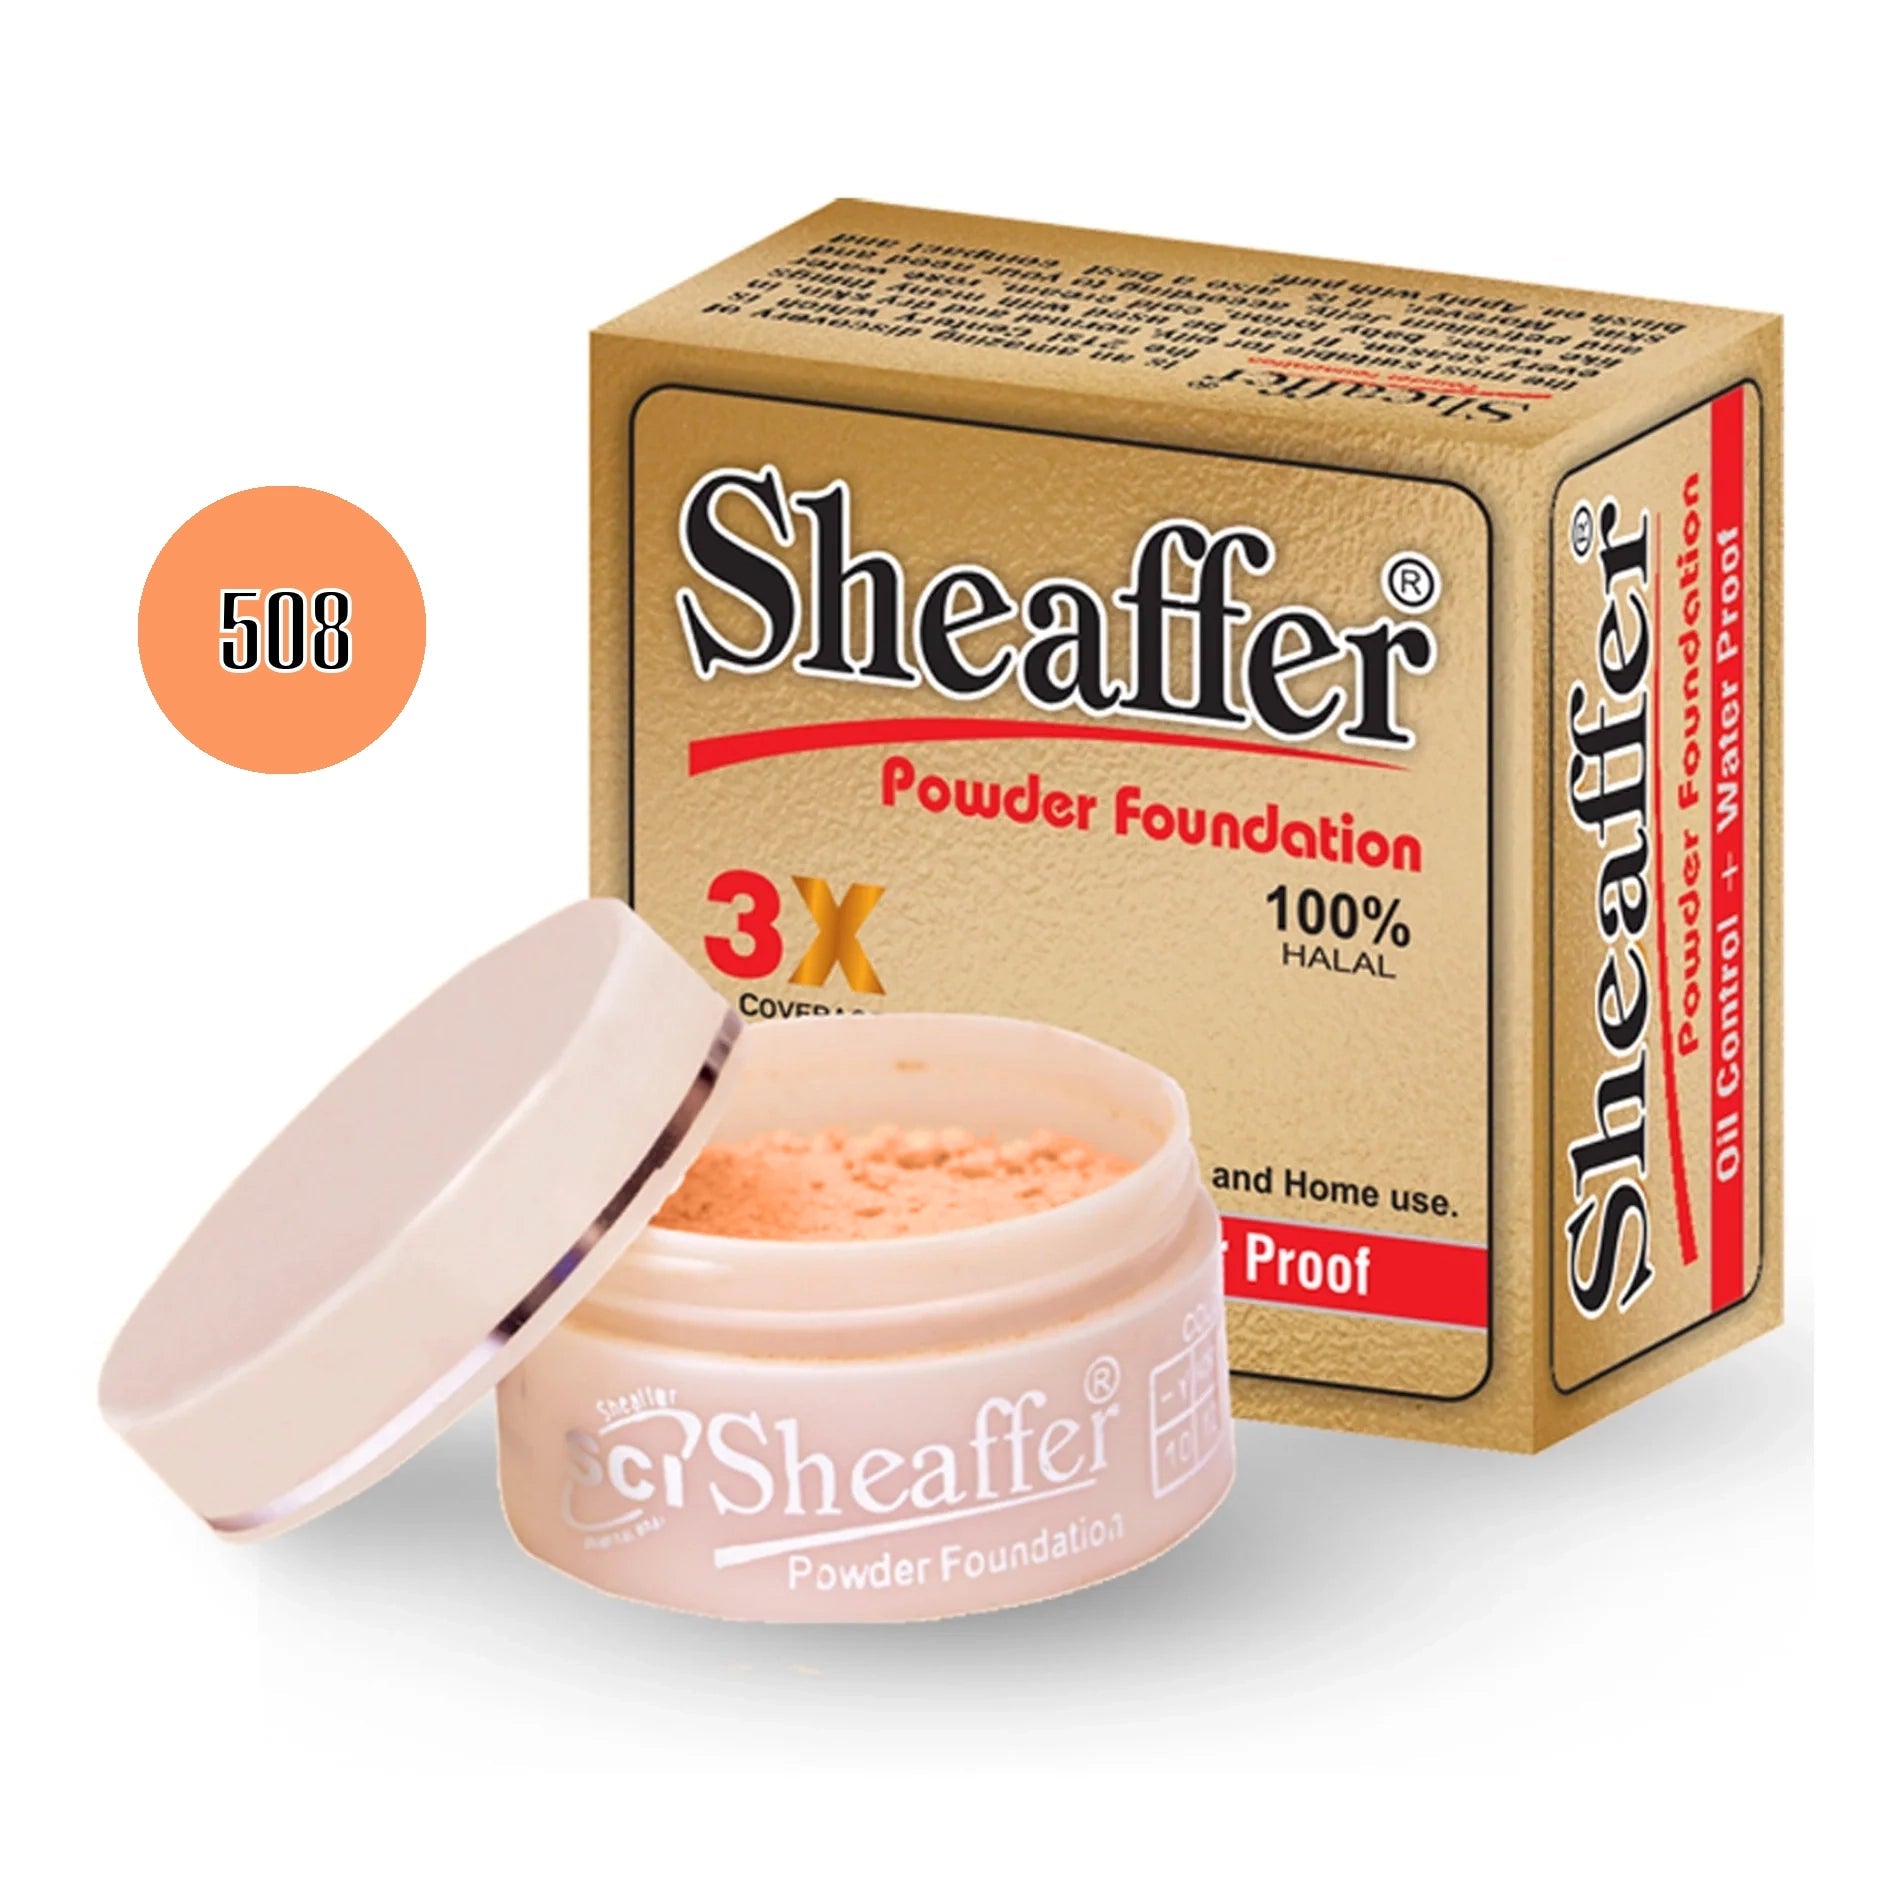 Sheaffer Powder Foundation Base 24 Shade - Retailershop - Online Shopping Center